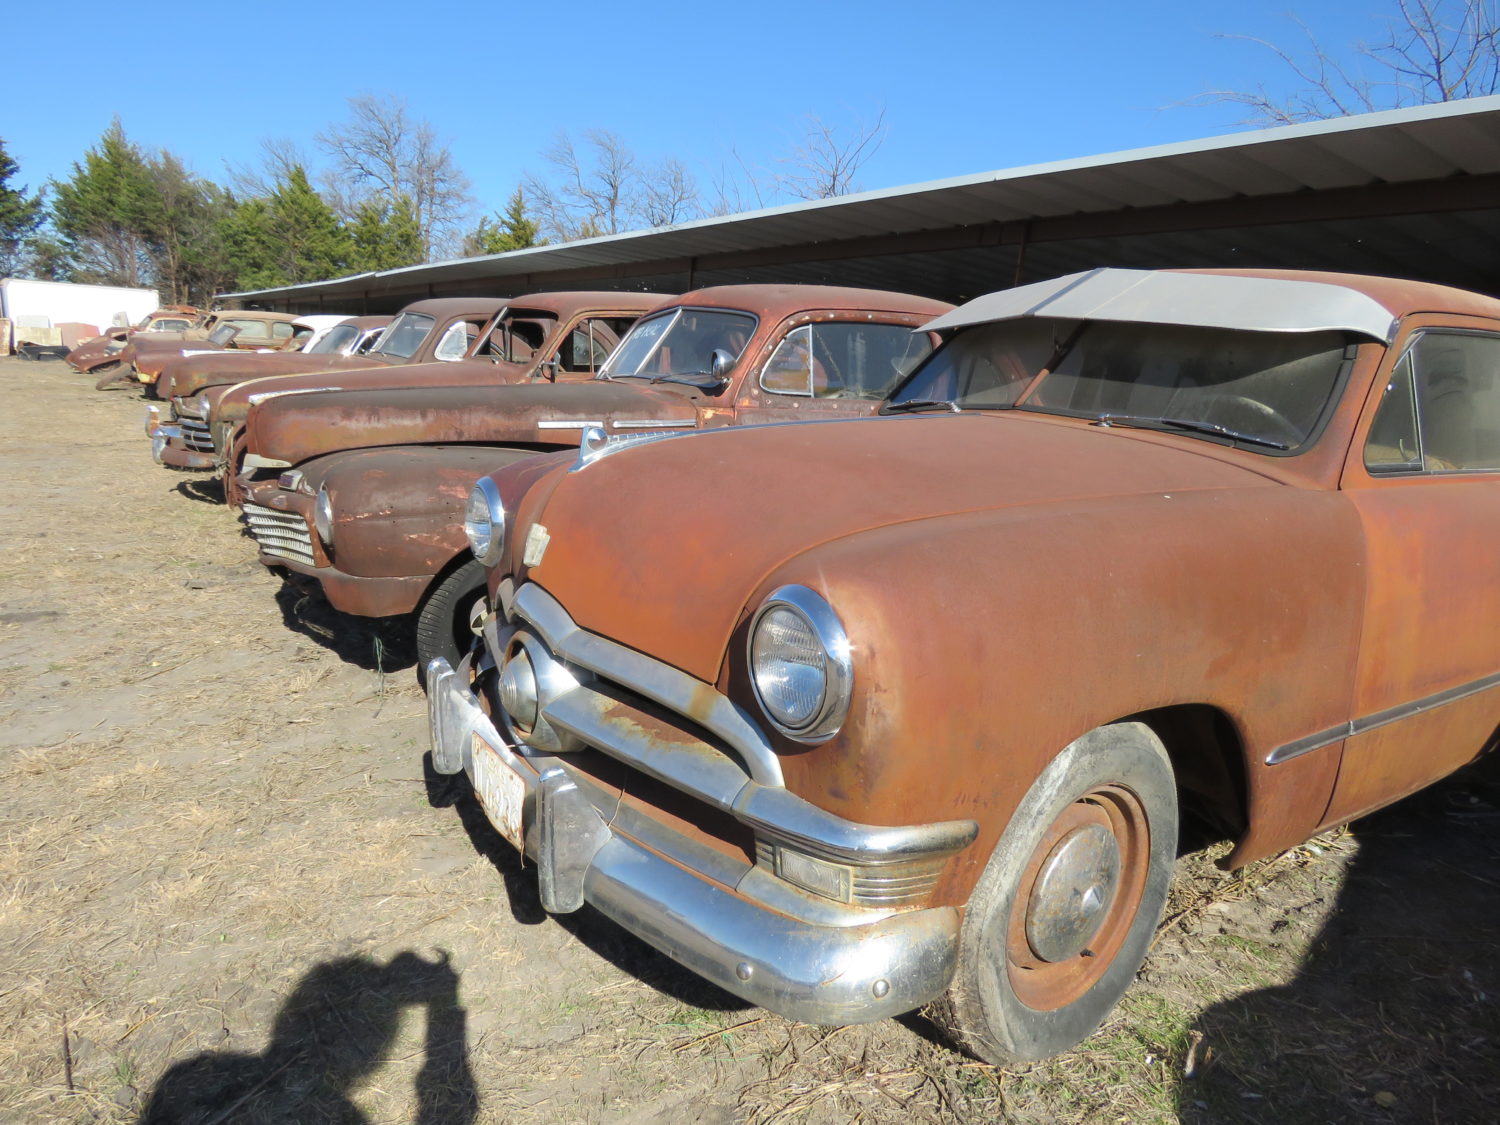 200 Plus Classic Cars at Auction! Dennis Collin's Coffee Walk Presents Restoration Revival Auction!  - image 13